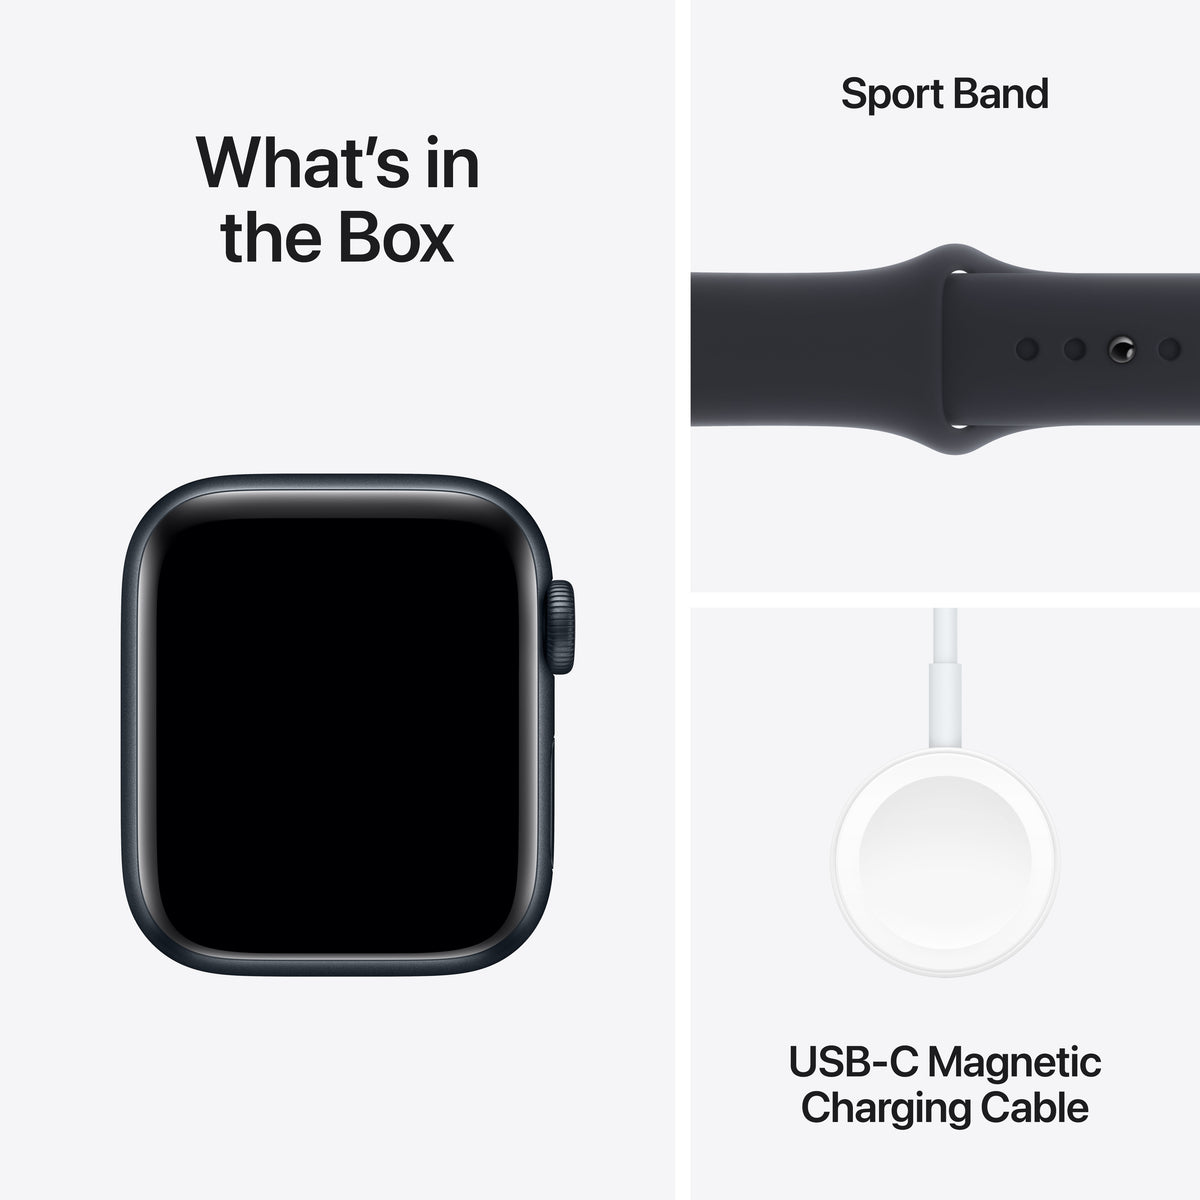 Apple Watch SE 40mm Midnight Aluminium Case With Midnight  Sport Band M/L - GPS